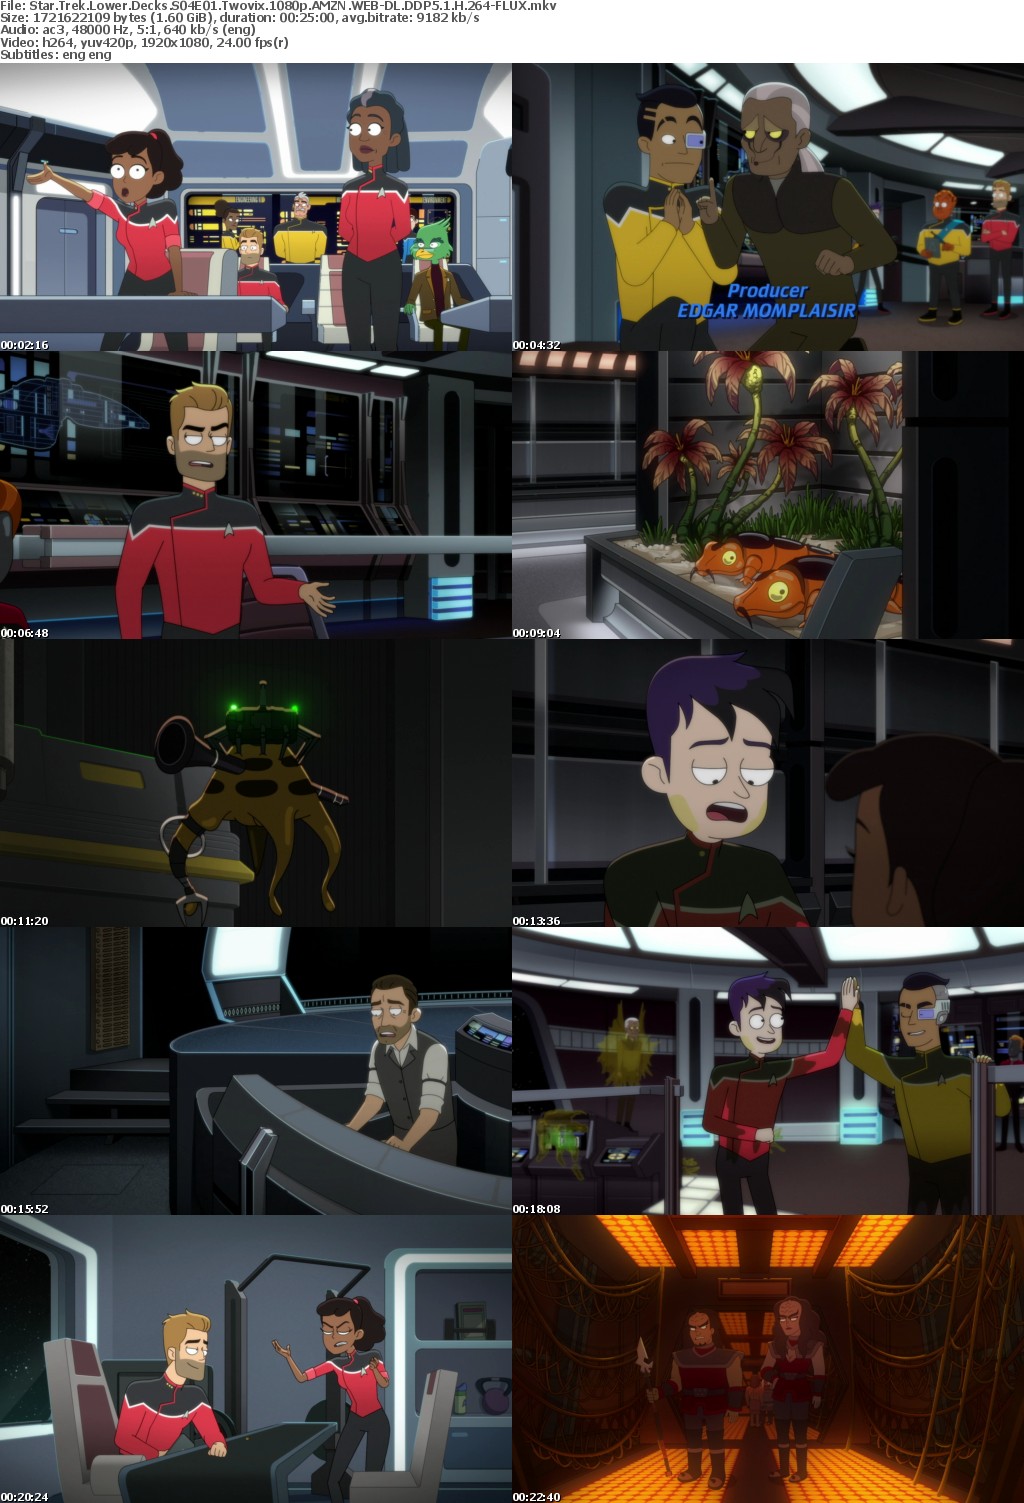 Star Trek Lower Decks S04E01 Twovix 1080p AMZN WEB-DL DDP5 1 H 264-FLUX